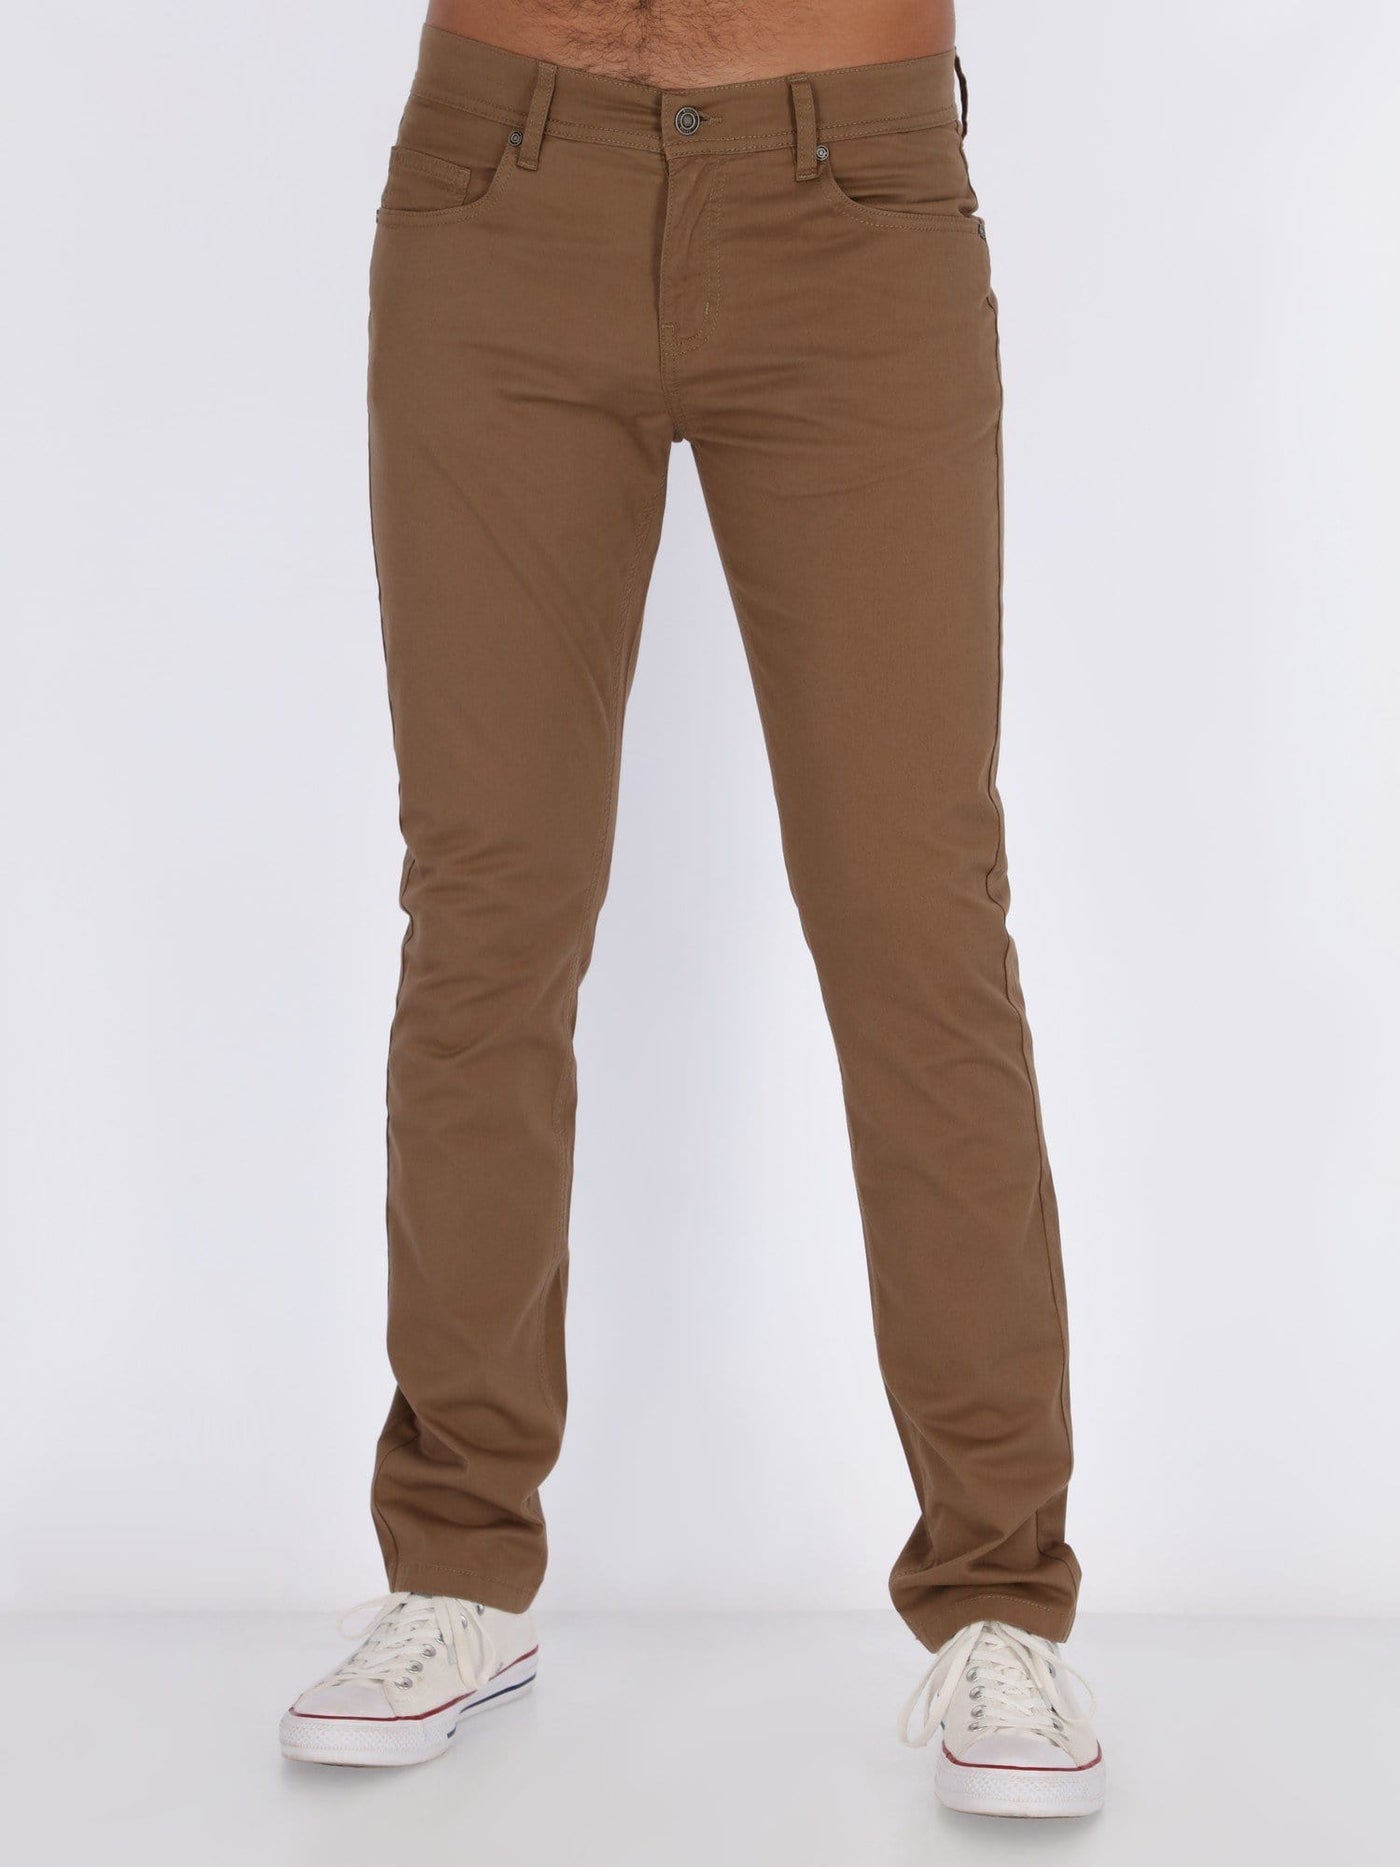 Daniel Hechter Pants & Shorts BROWN / 30 Basic Pants with Regular Cut